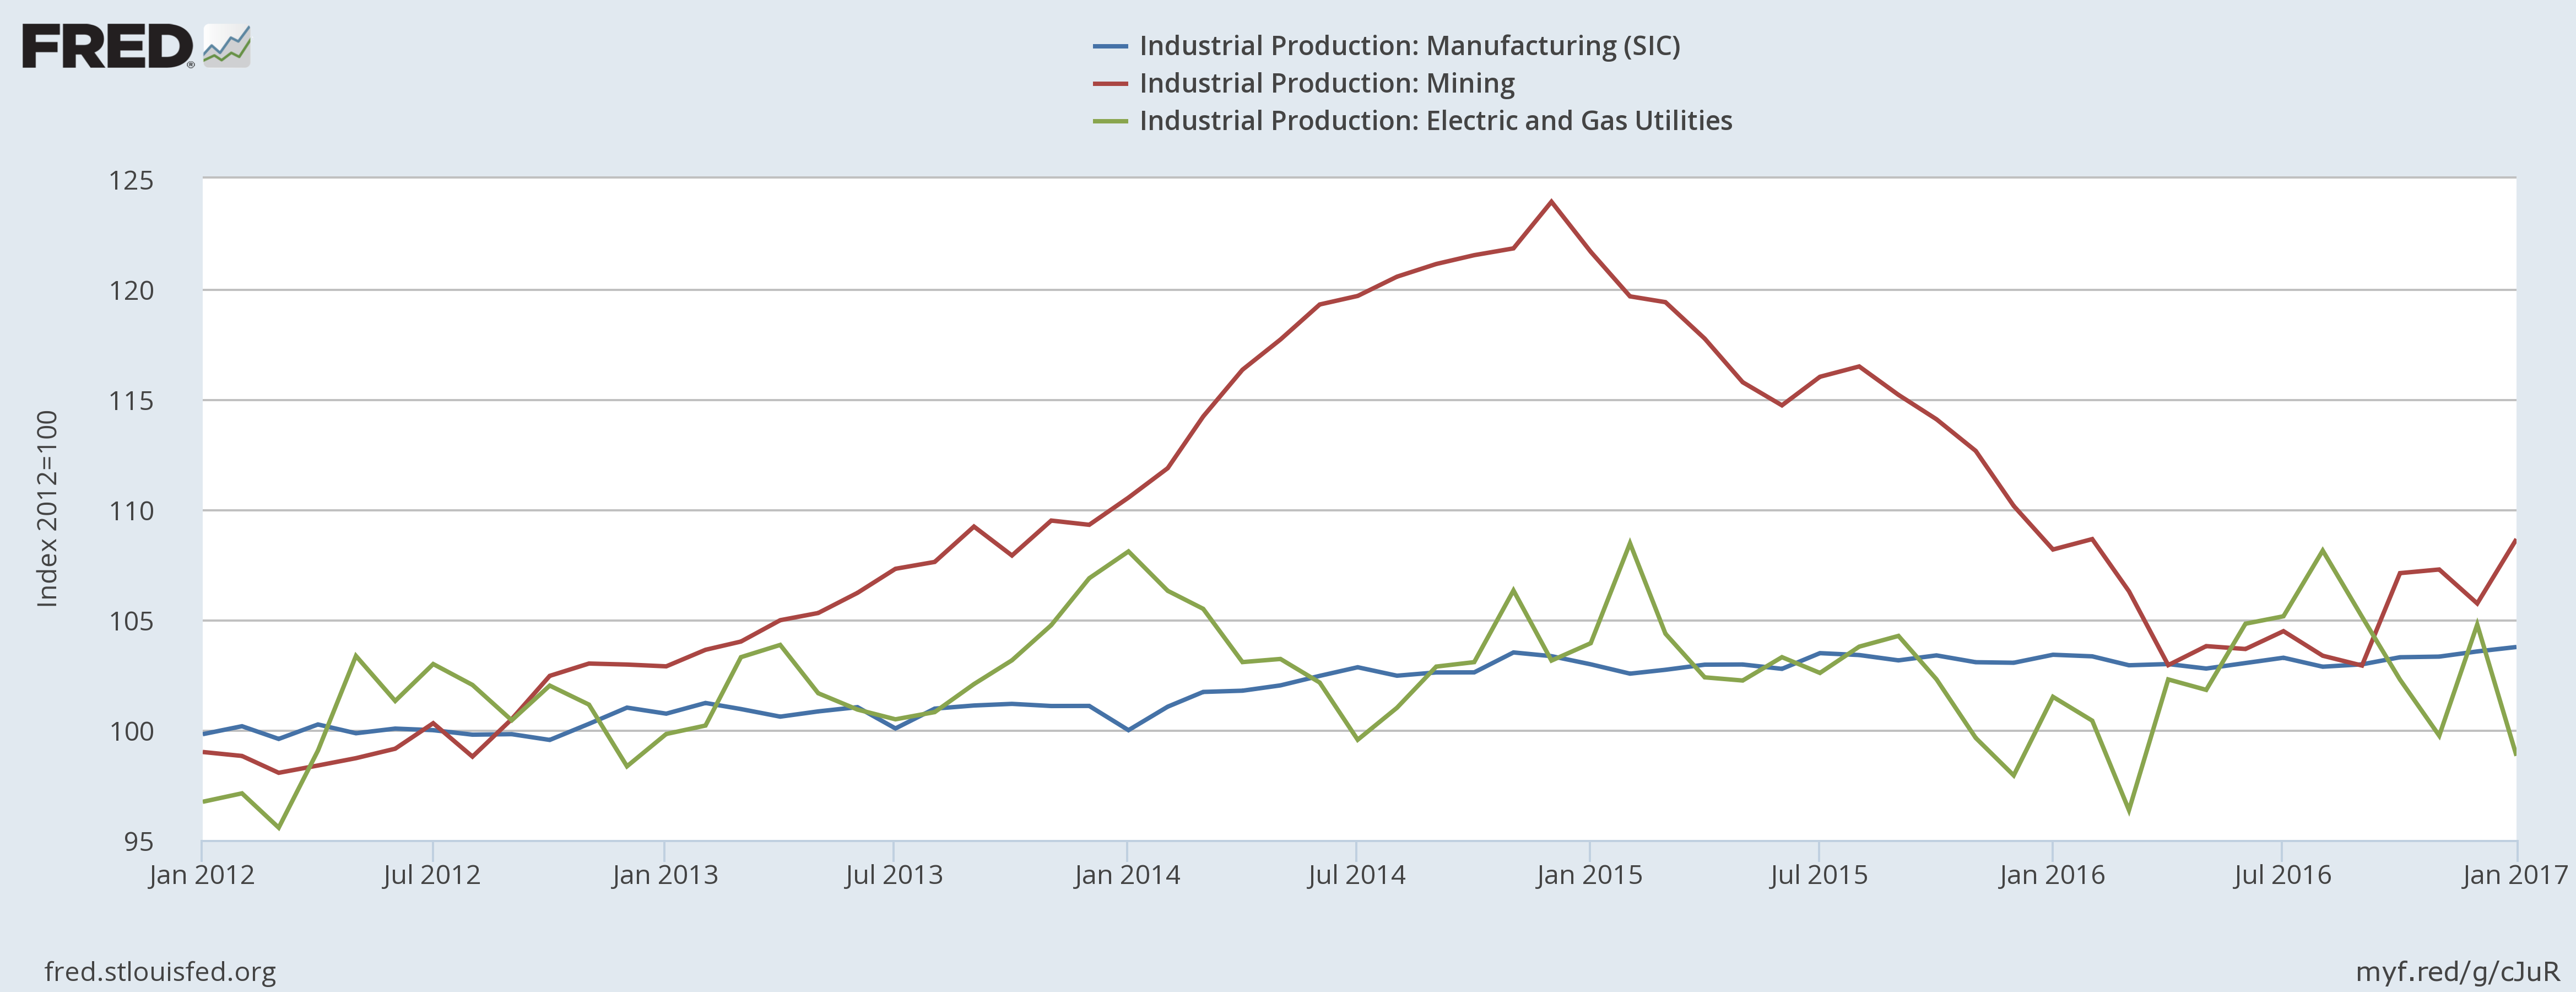 Industrial Production III